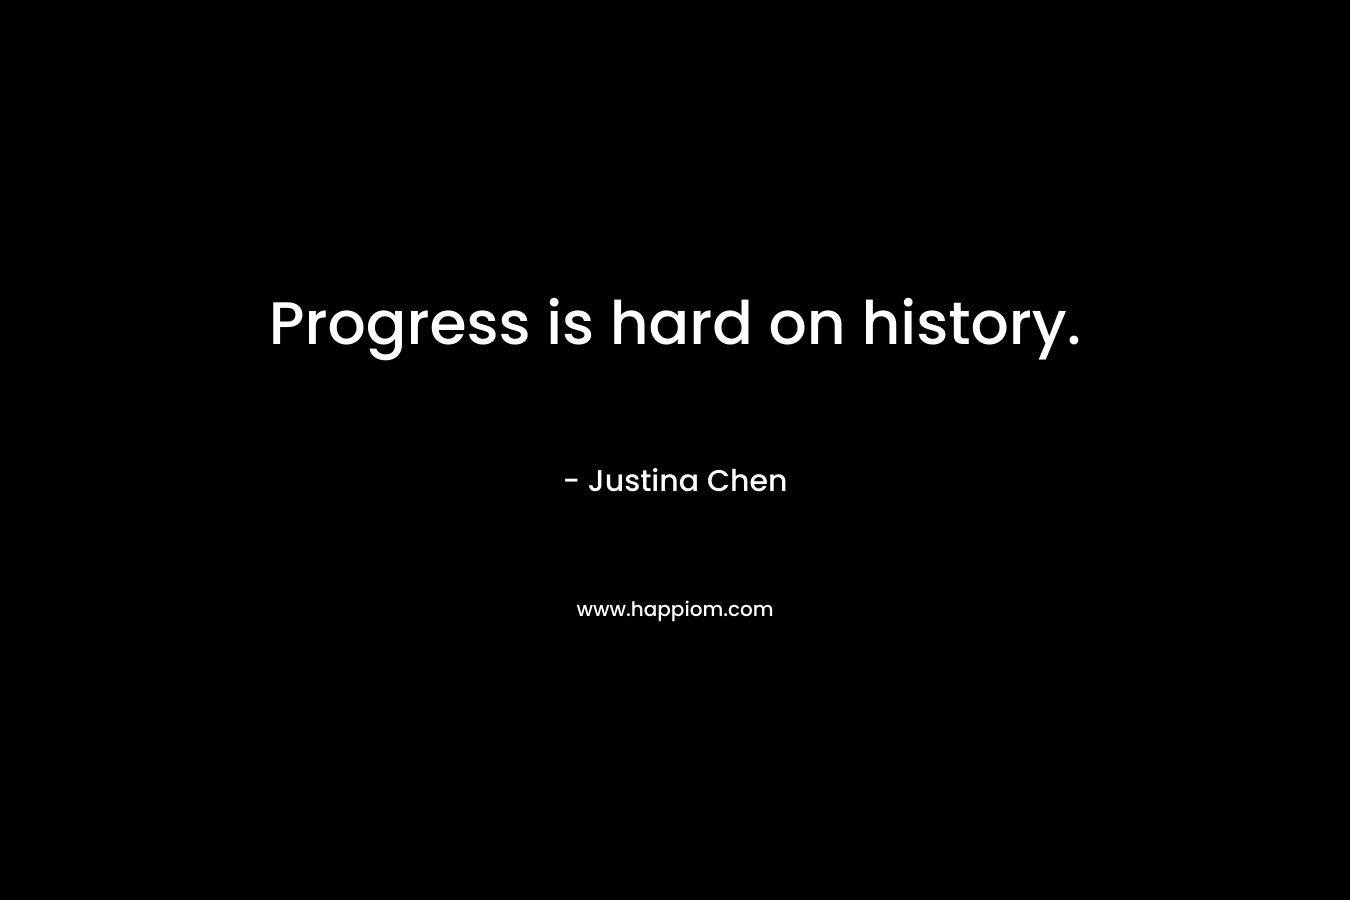 Progress is hard on history.